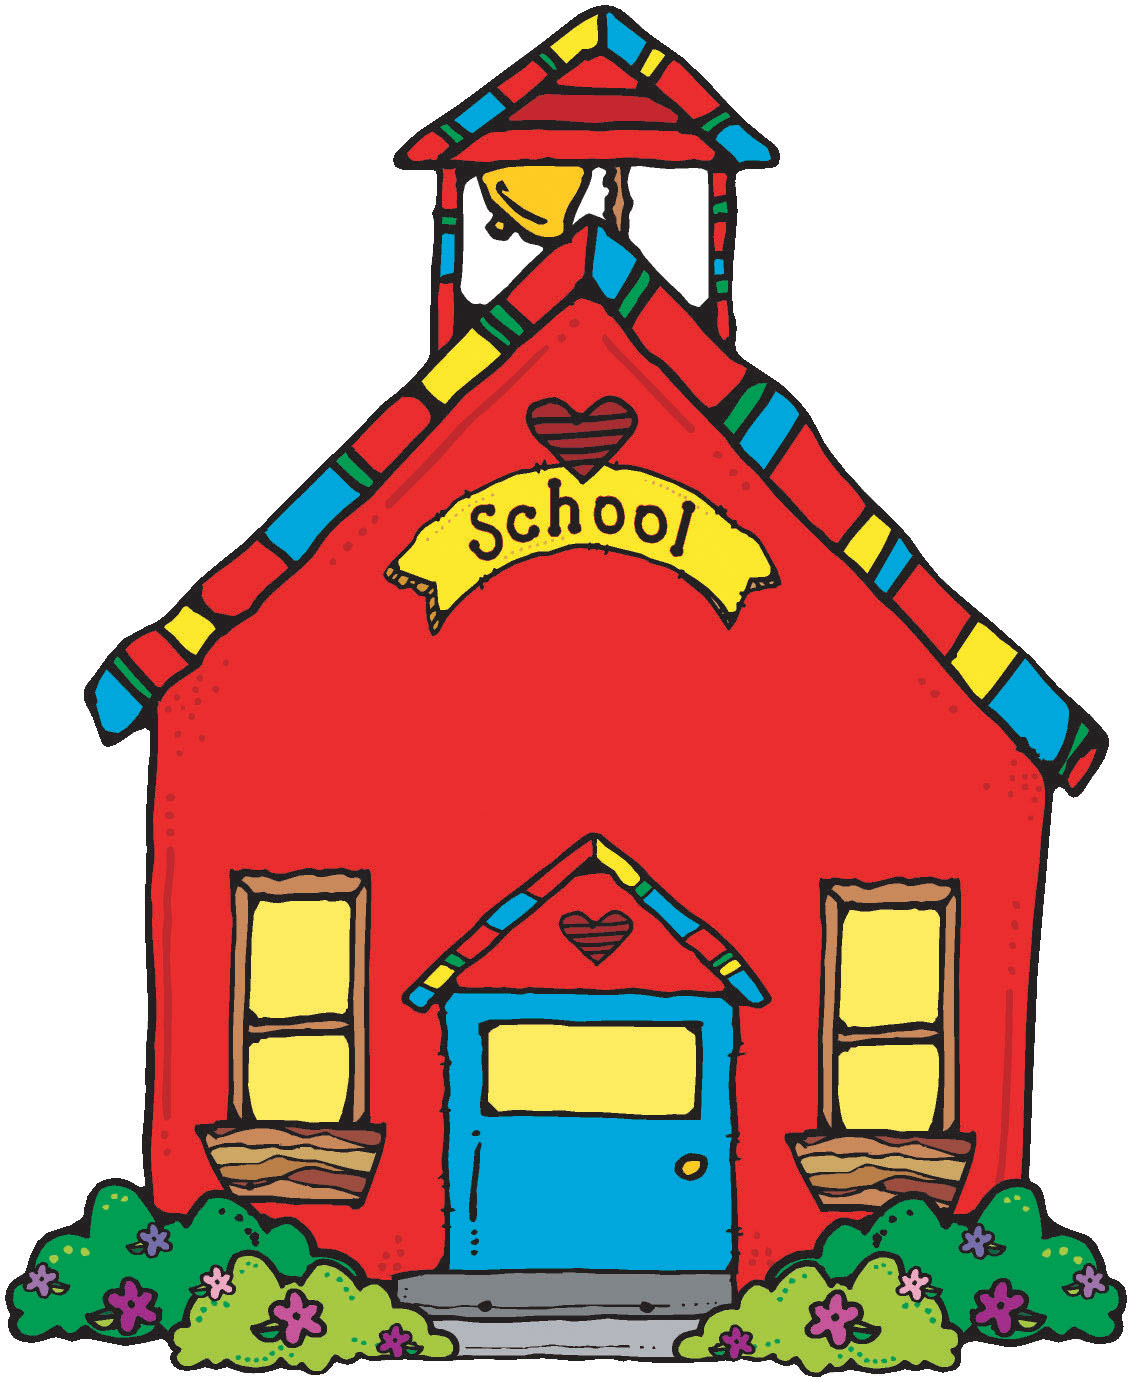 School House Clipart - ClipArt Best